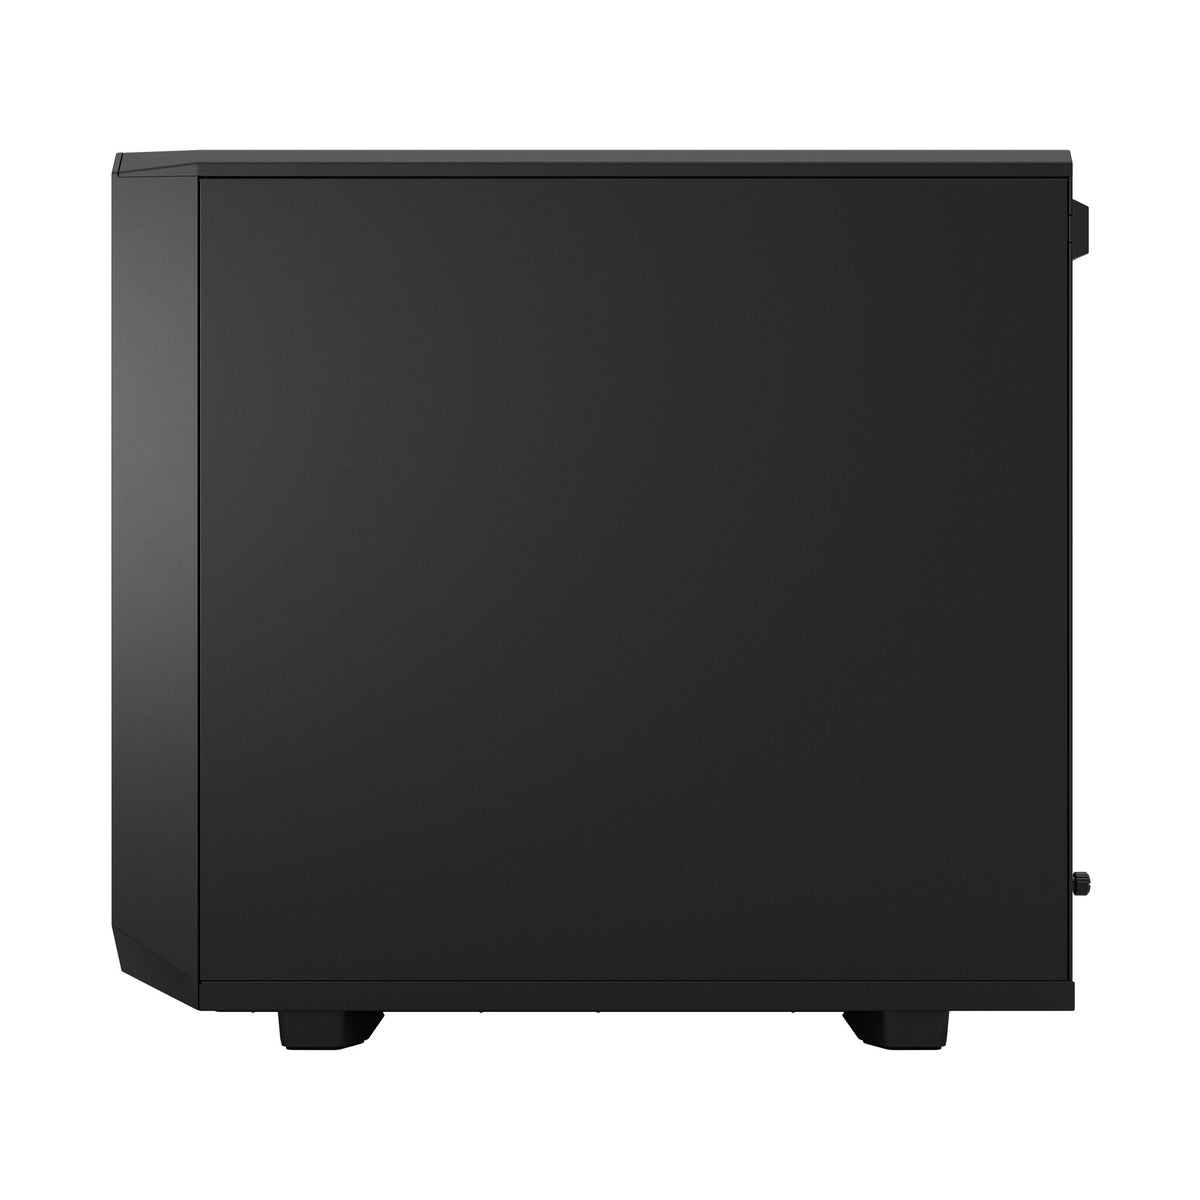 Fractal Design Meshify 2 Nano - Mini ITX Tower Case in Black